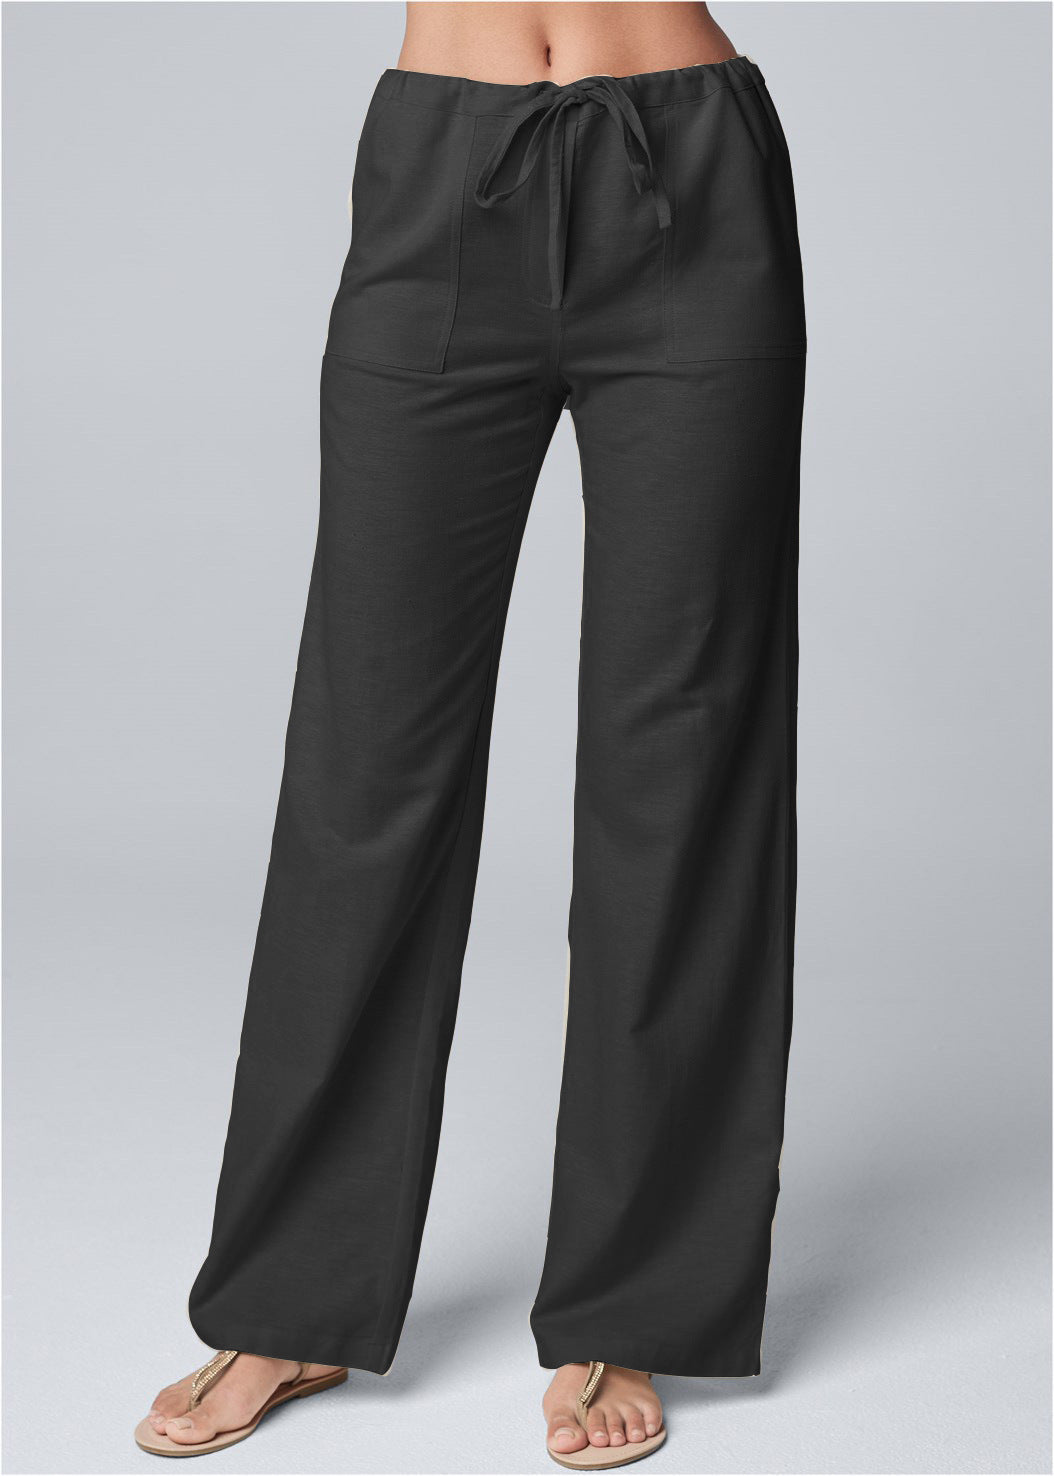 Pants  | Women's Fashion Solid Color Loose Lace-up Cotton And Linen Straight-leg Pants | Black |  2XL| thecurvestory.myshopify.com